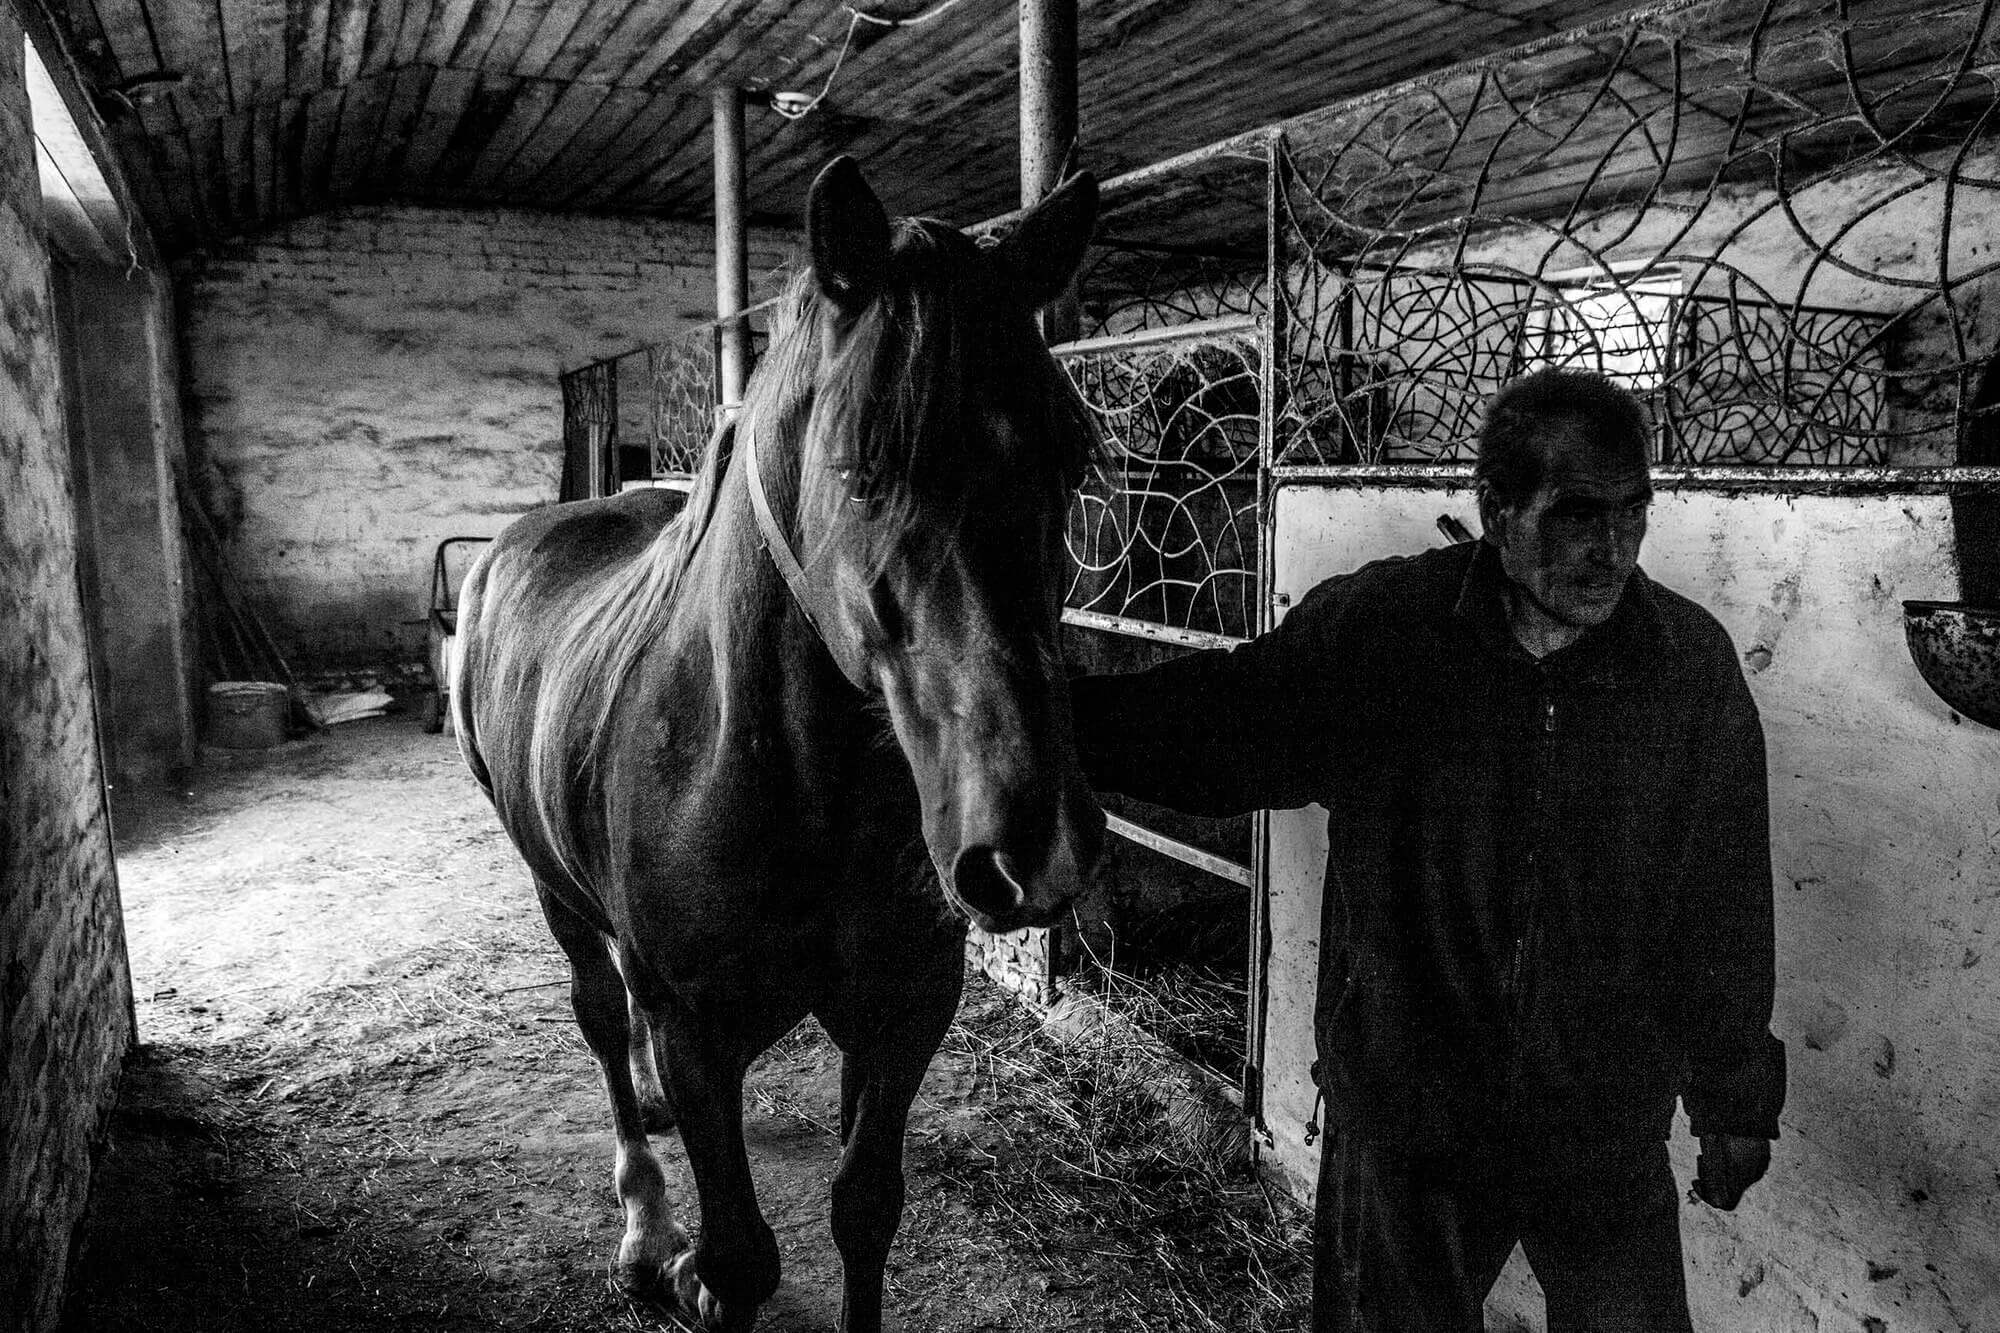 Денис Керпек (праворуч) та Дмитро Новицький гладять коней. Фото: Станіслав Остроус / Заборона